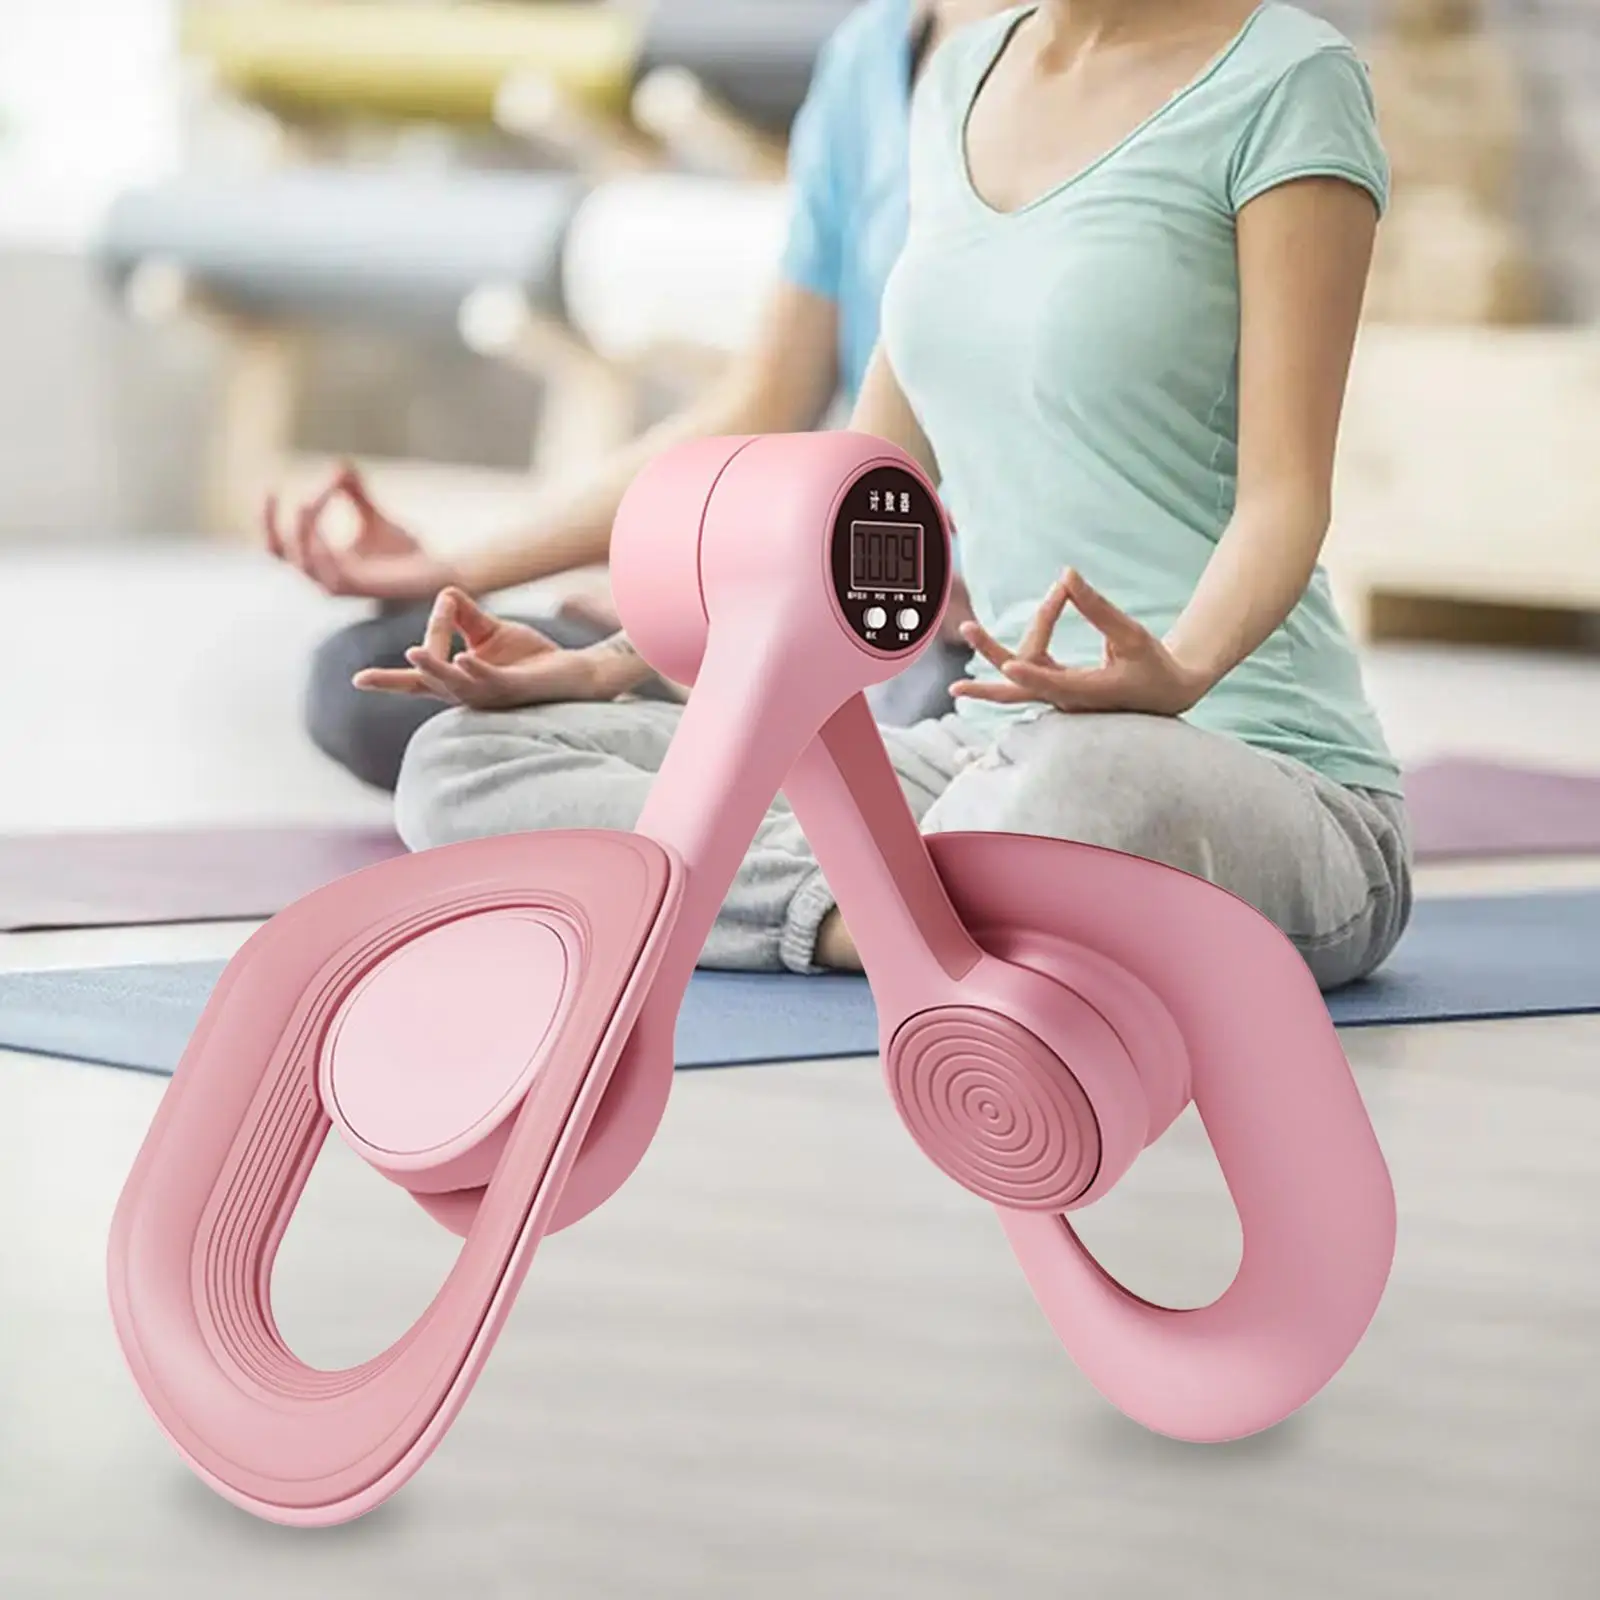 Thigh Master Legs Buttocks Strength Training Butt, Leg, Arm Toner Kegel Exercise Device for Workout Home Yoga Ladies